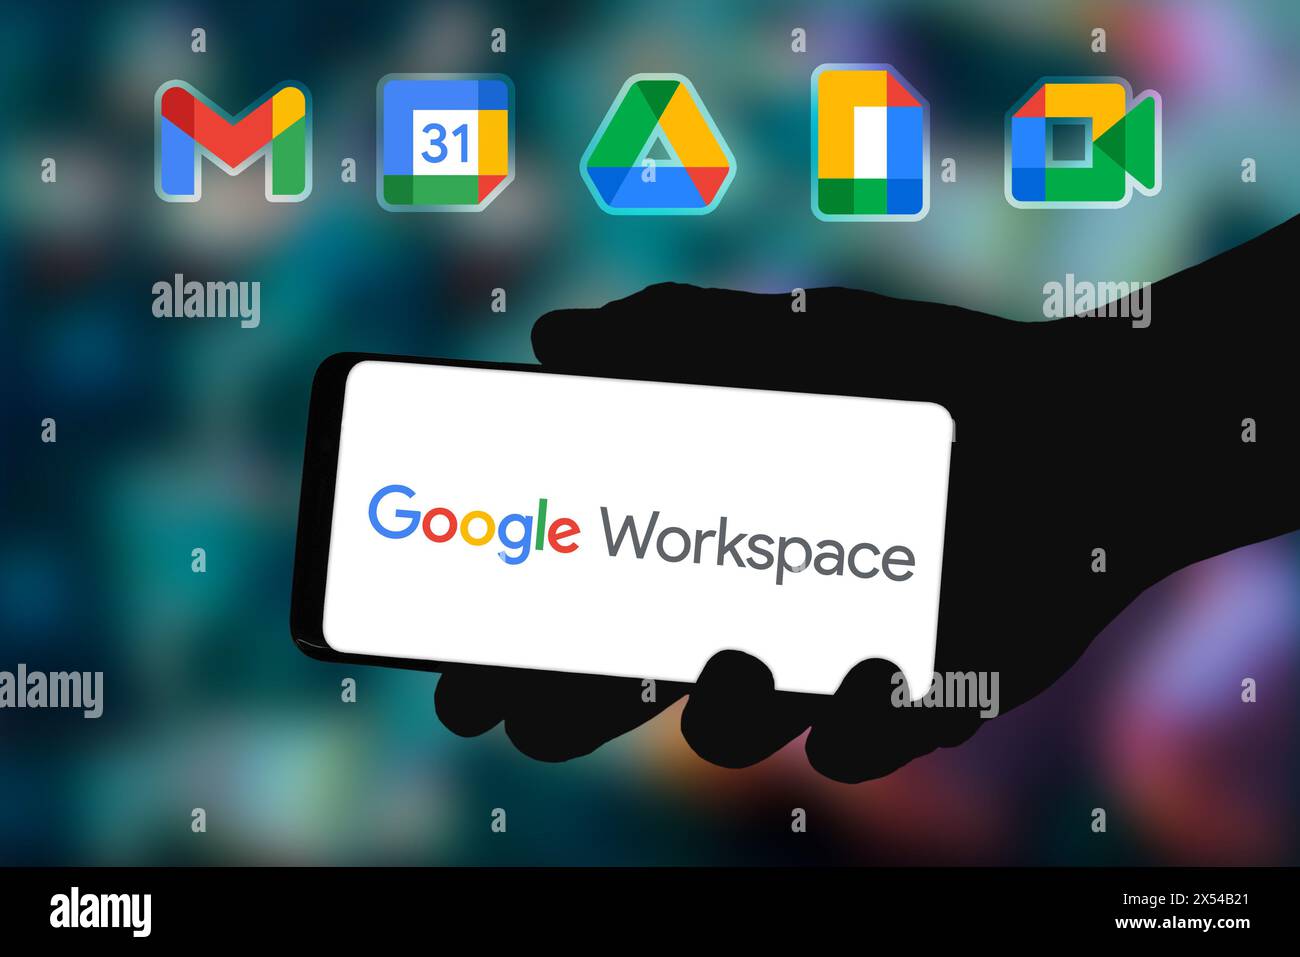 Google Workspace displayed on smartphone Stock Photo